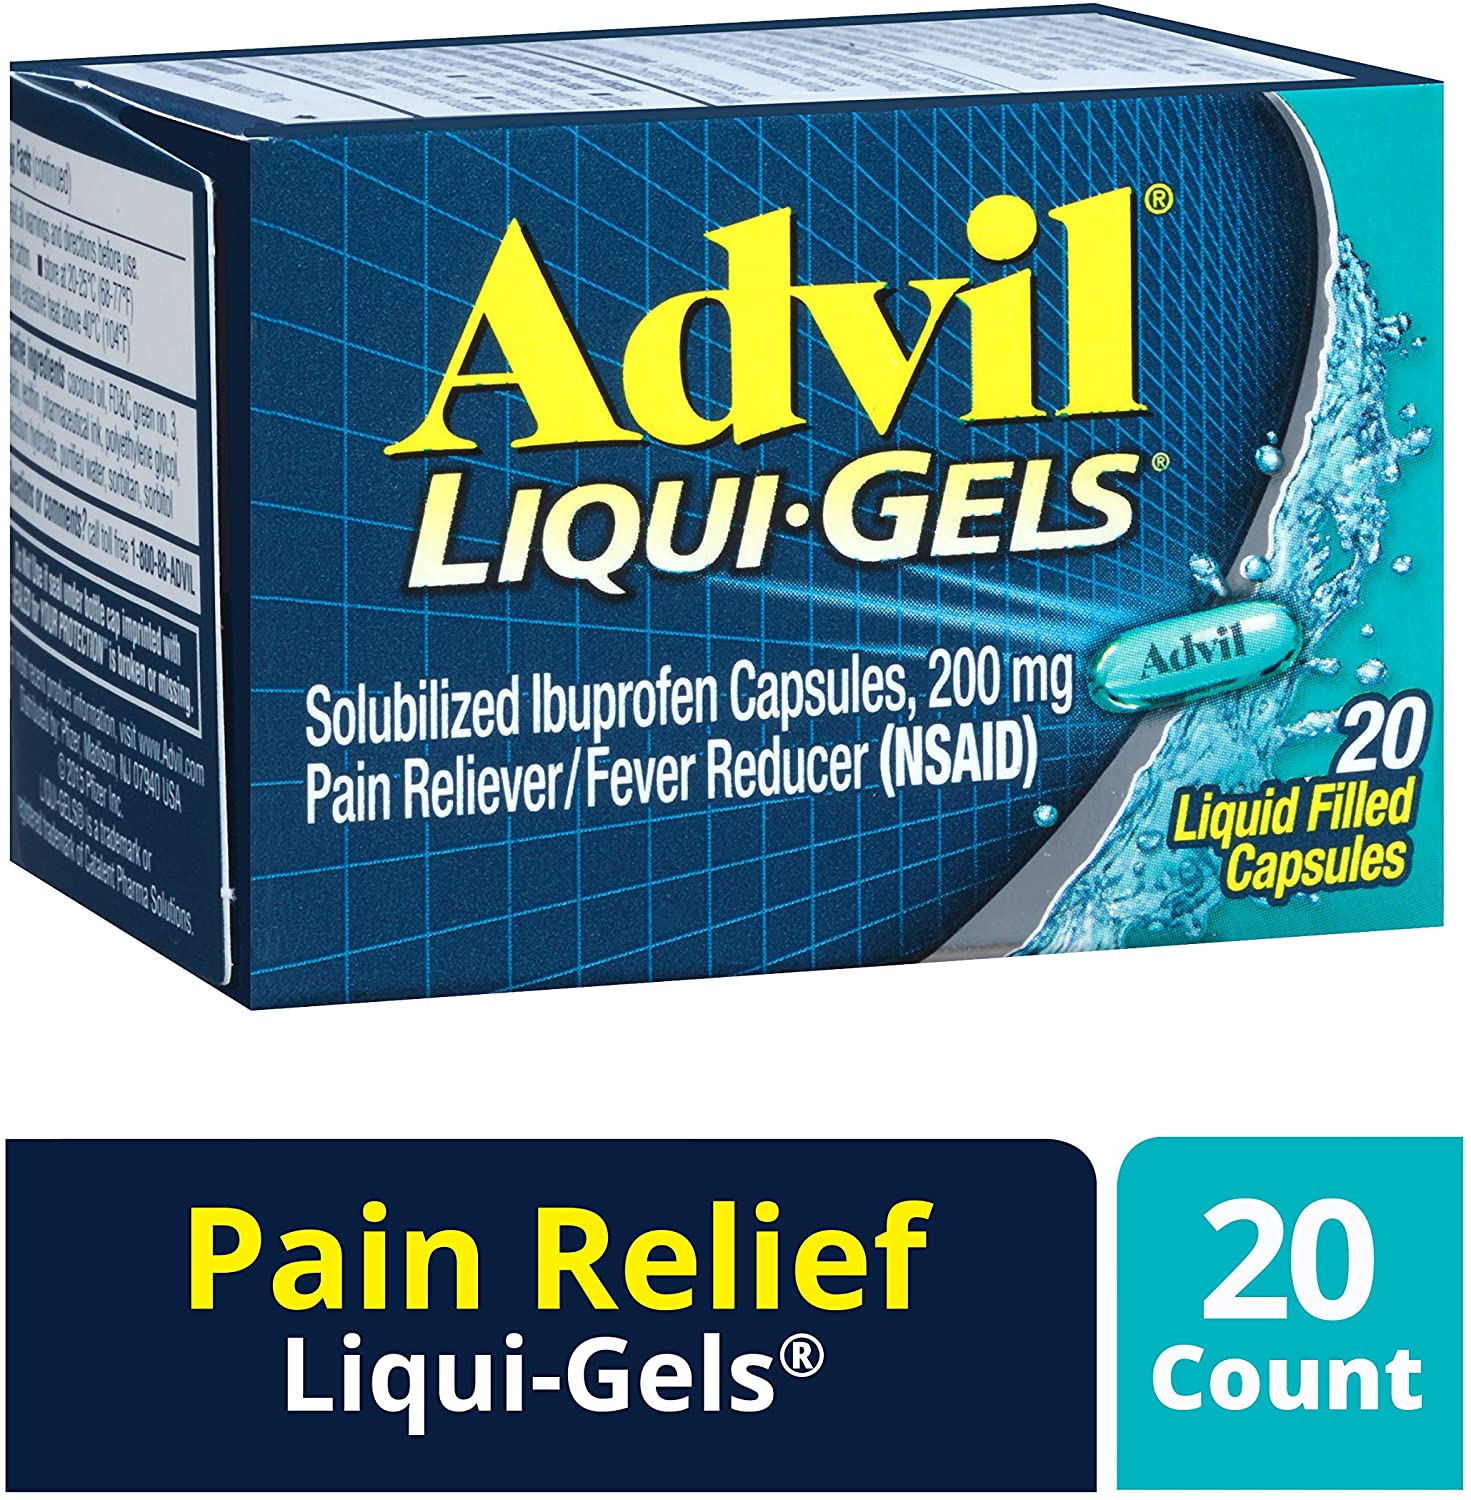 Advil Liqui-Gels Pain Reliever and Fever Reducer $3.98 (REG $7.00)